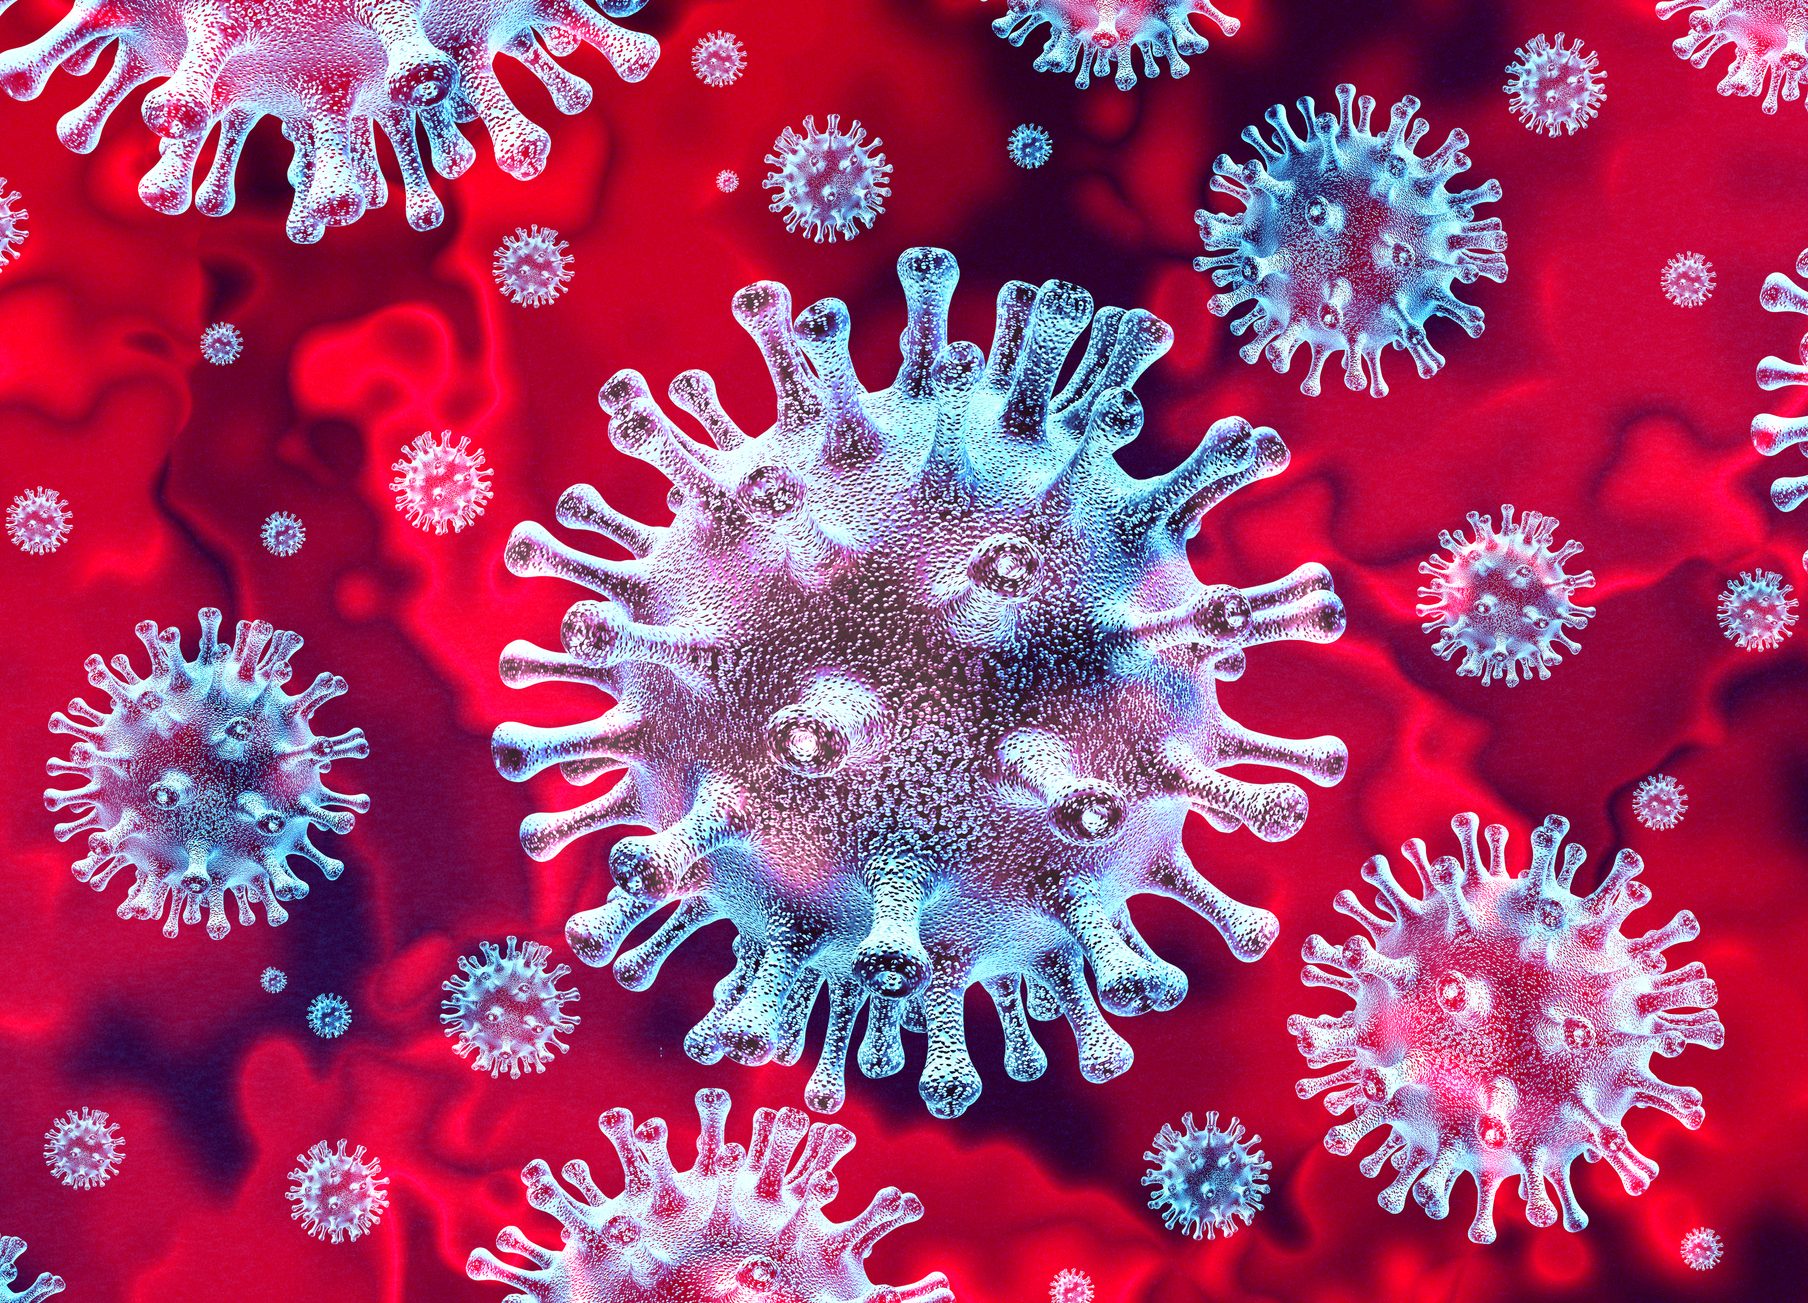 FUNIBER-coronavirus-outbreak